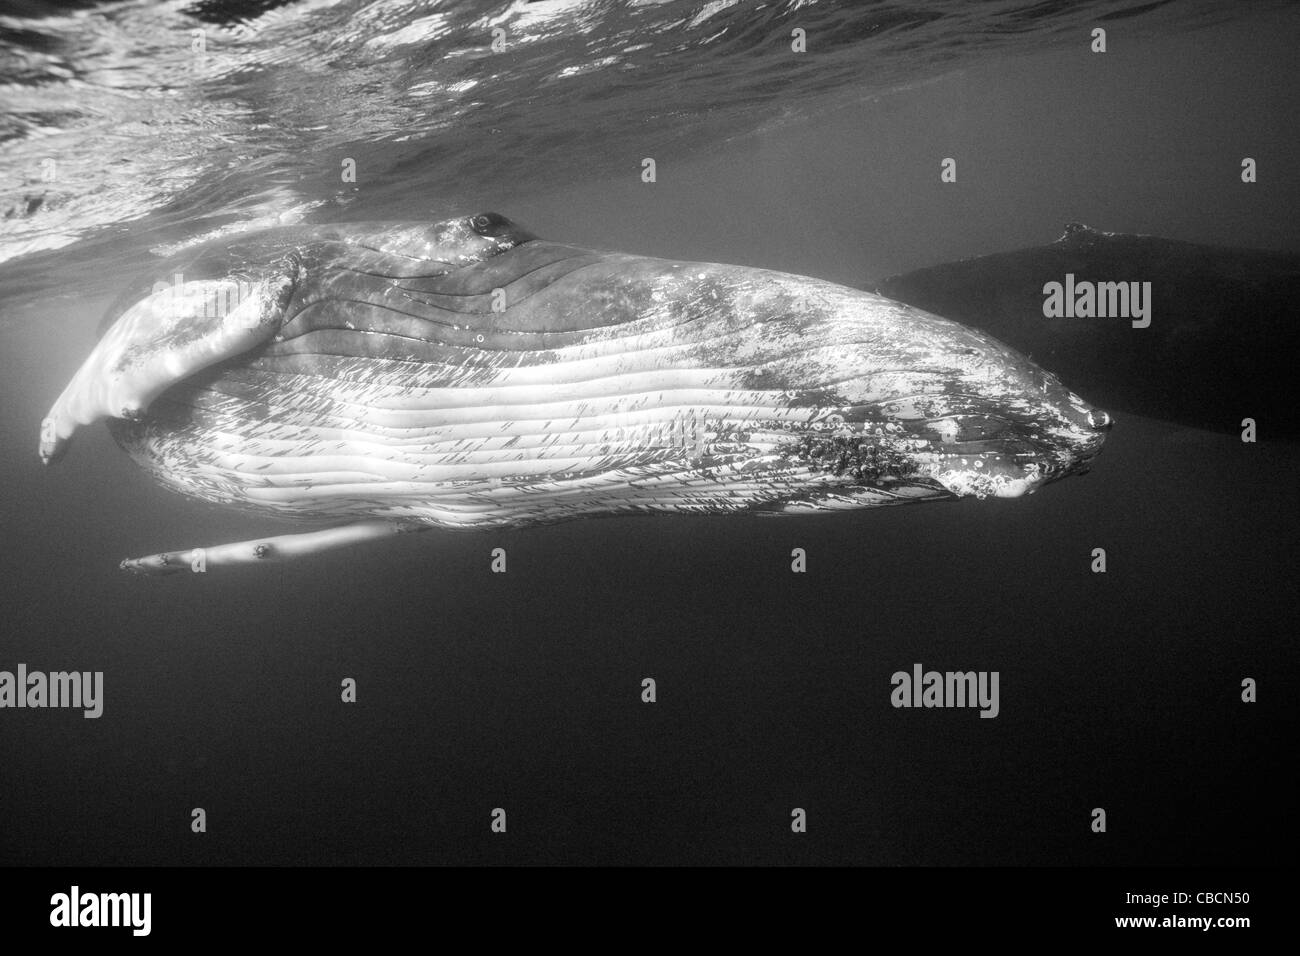 La ballena jorobada, Megaptera novaeangliae, Banco de Plata, Océano Atlántico, República Dominicana Foto de stock